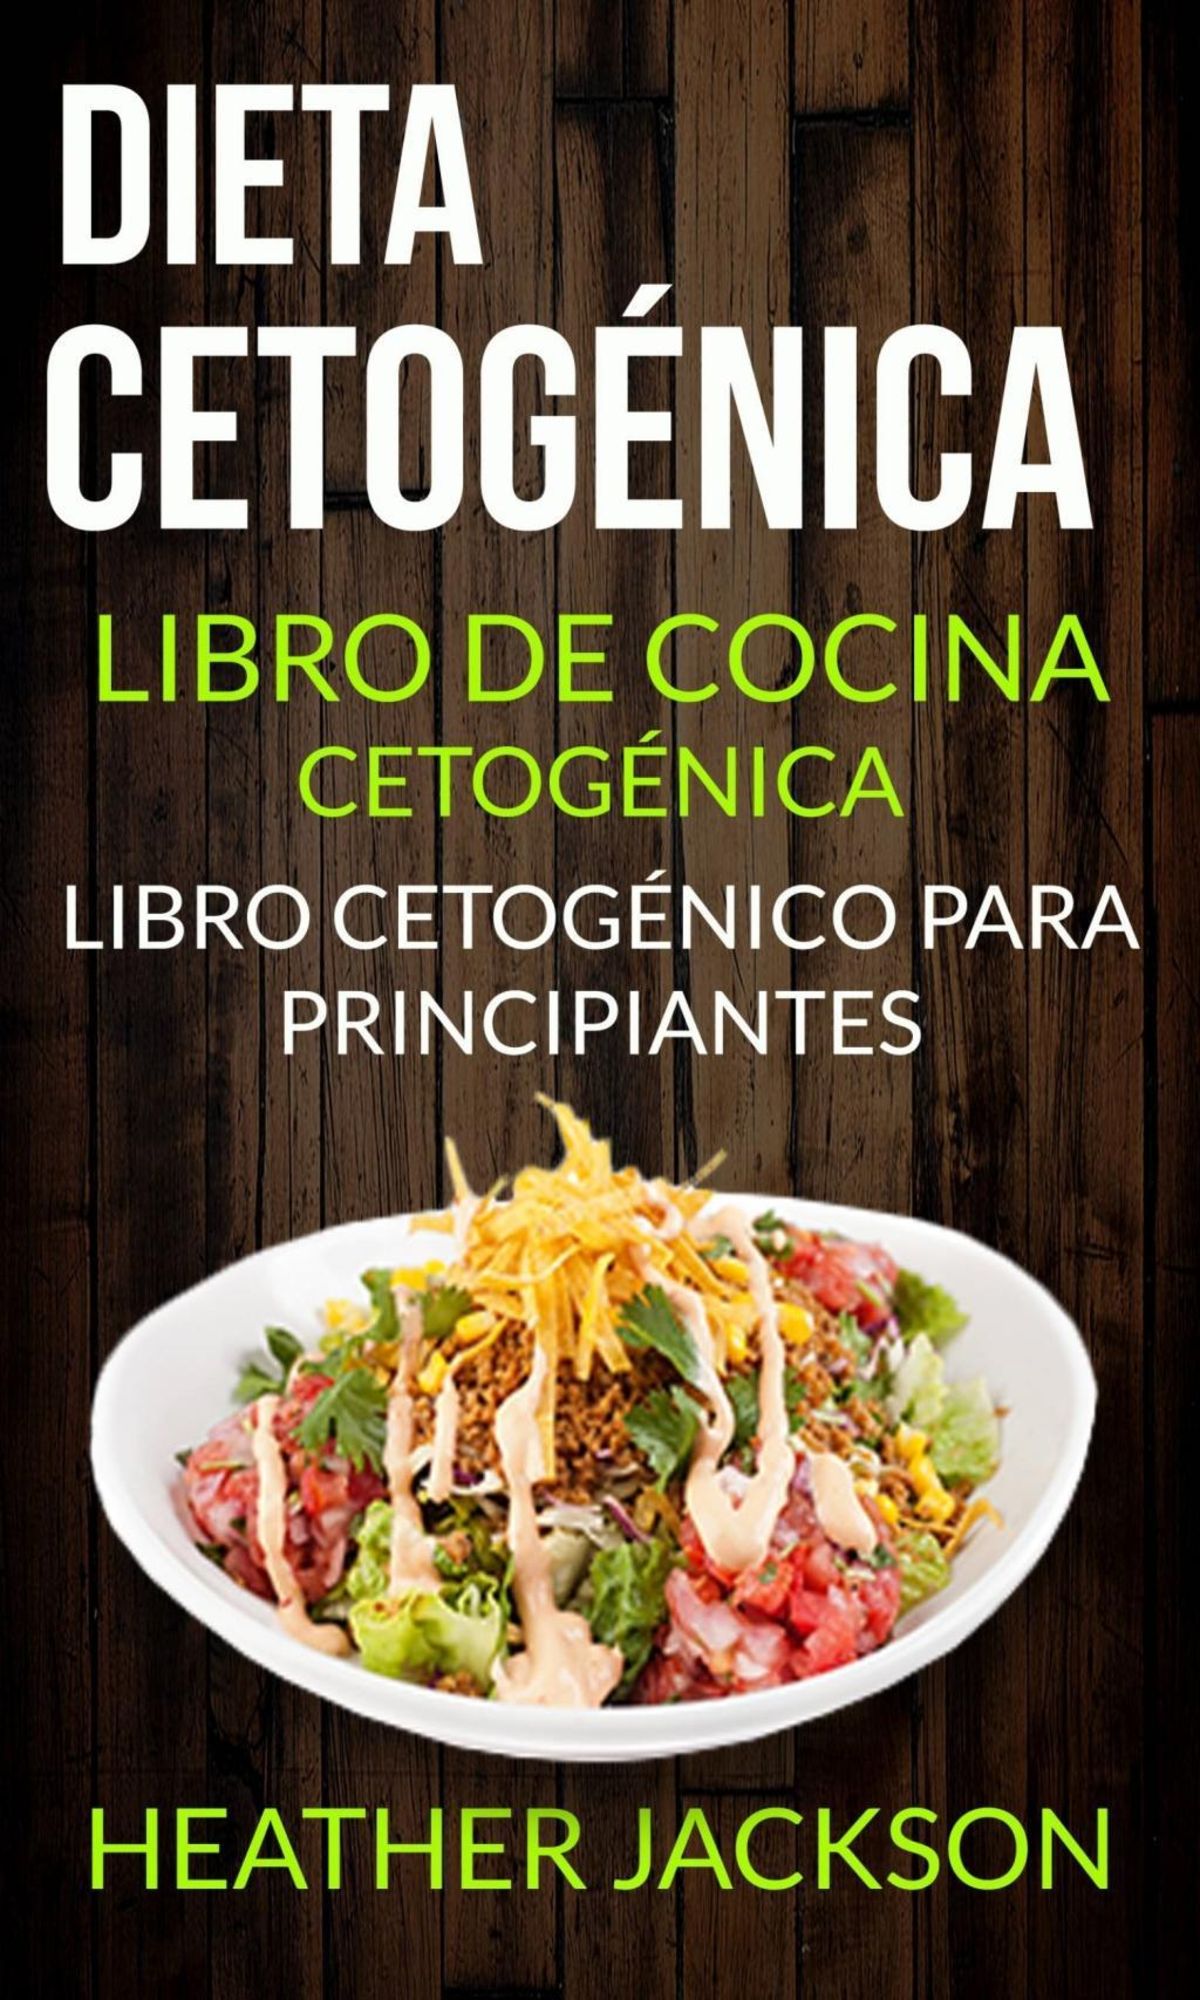 Dieta Cetogénica: Libro De Cocina Cetogénica - Libro Cetogénico Para  Principiantes von Heather Jackson. eBooks | Orell Füssli